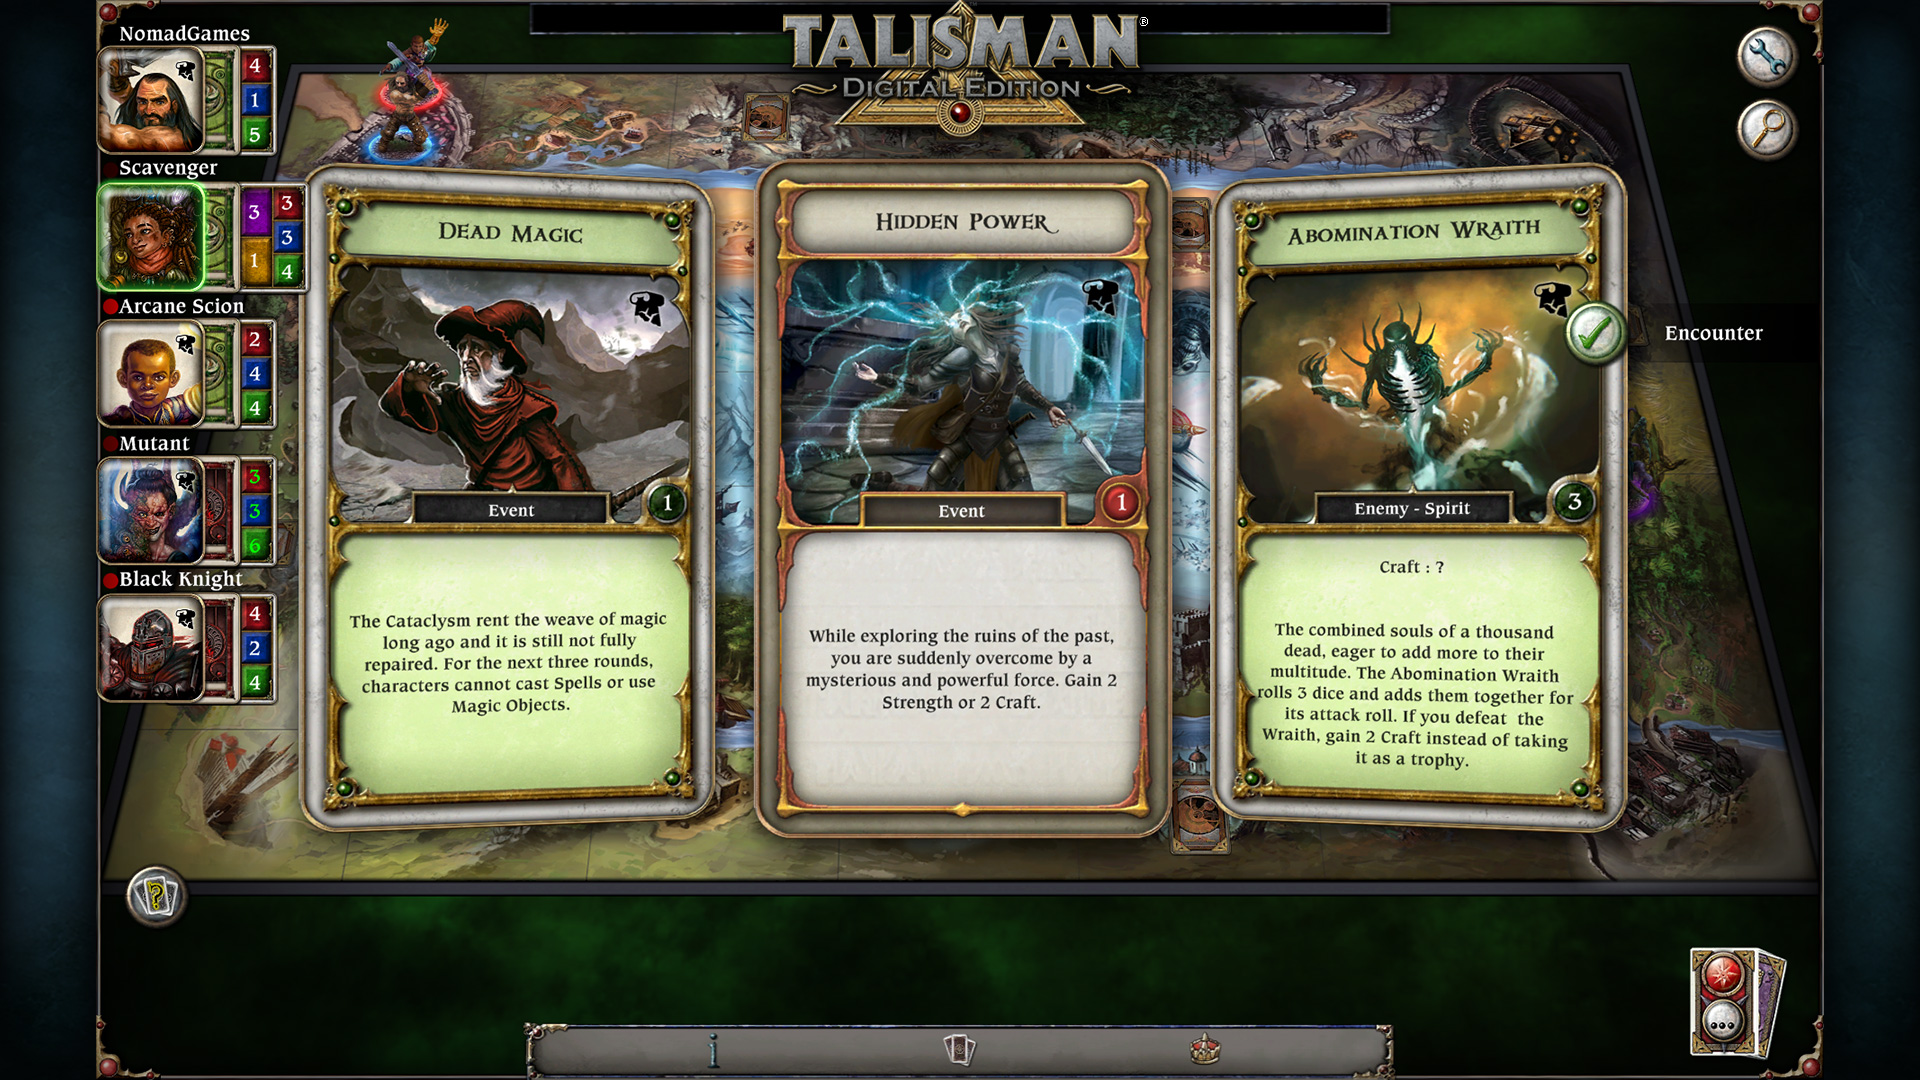 [$ 3.71] Talisman - The Cataclysm Expansion DLC Steam CD Key